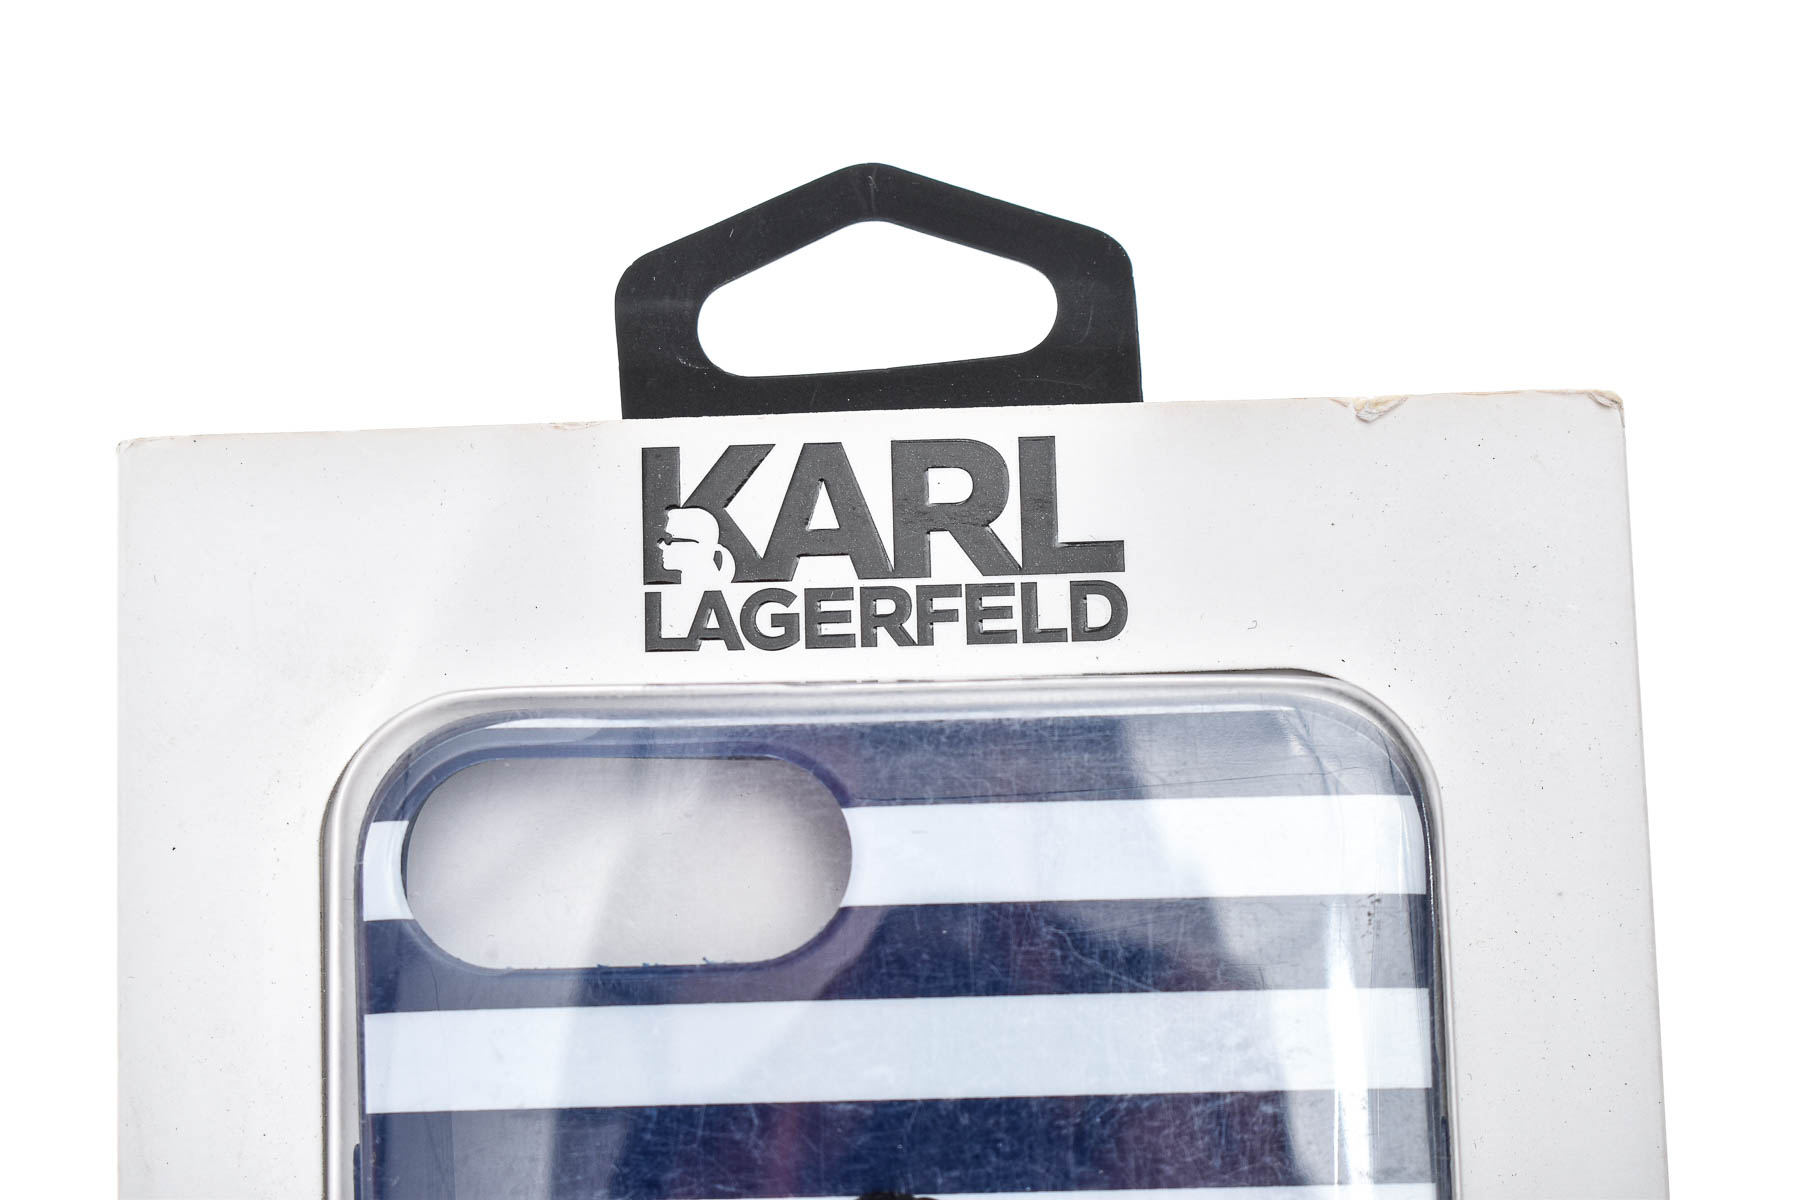 Phone case - iPhone 8 Plus - KARL LAGERFELD - 2